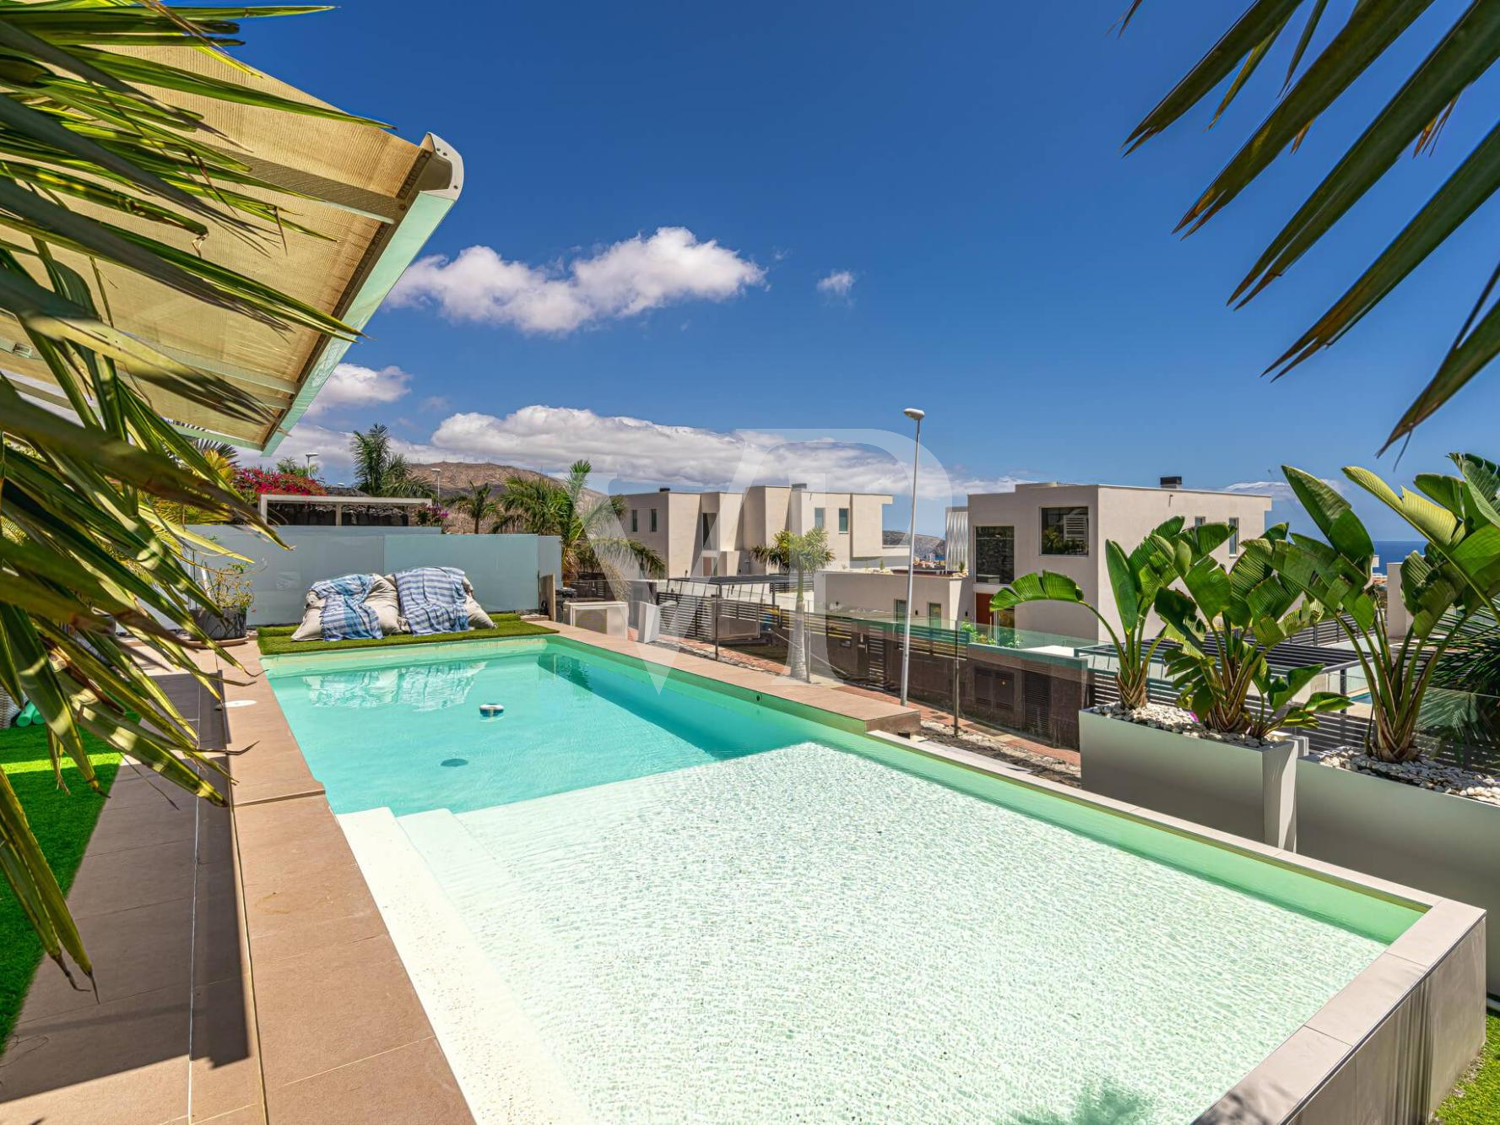 Fantastische Immobilie mit Meerblick und privatem Pool in Caldera del Rey